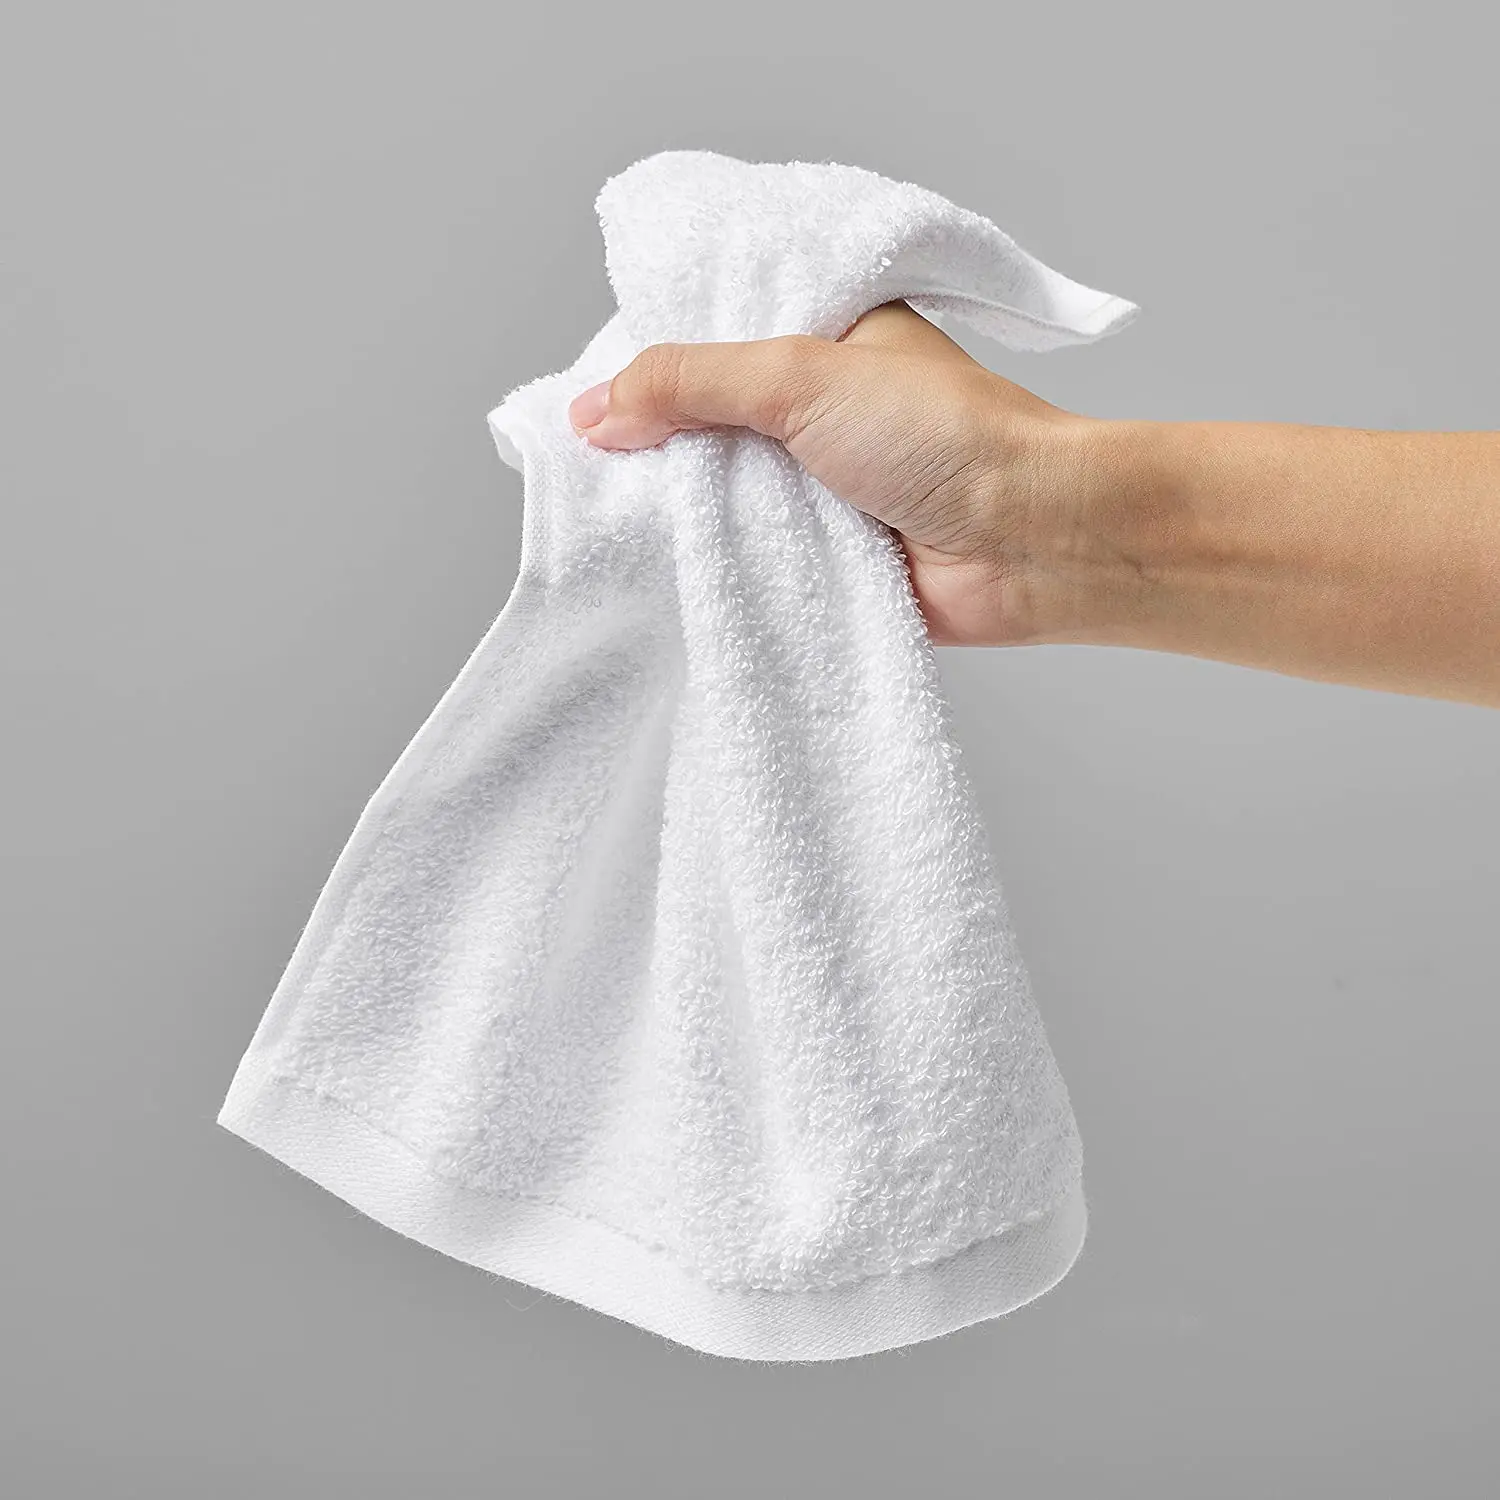 Simply Spa Bath Towel White - Shop Towels & Washcloths at H-E-B